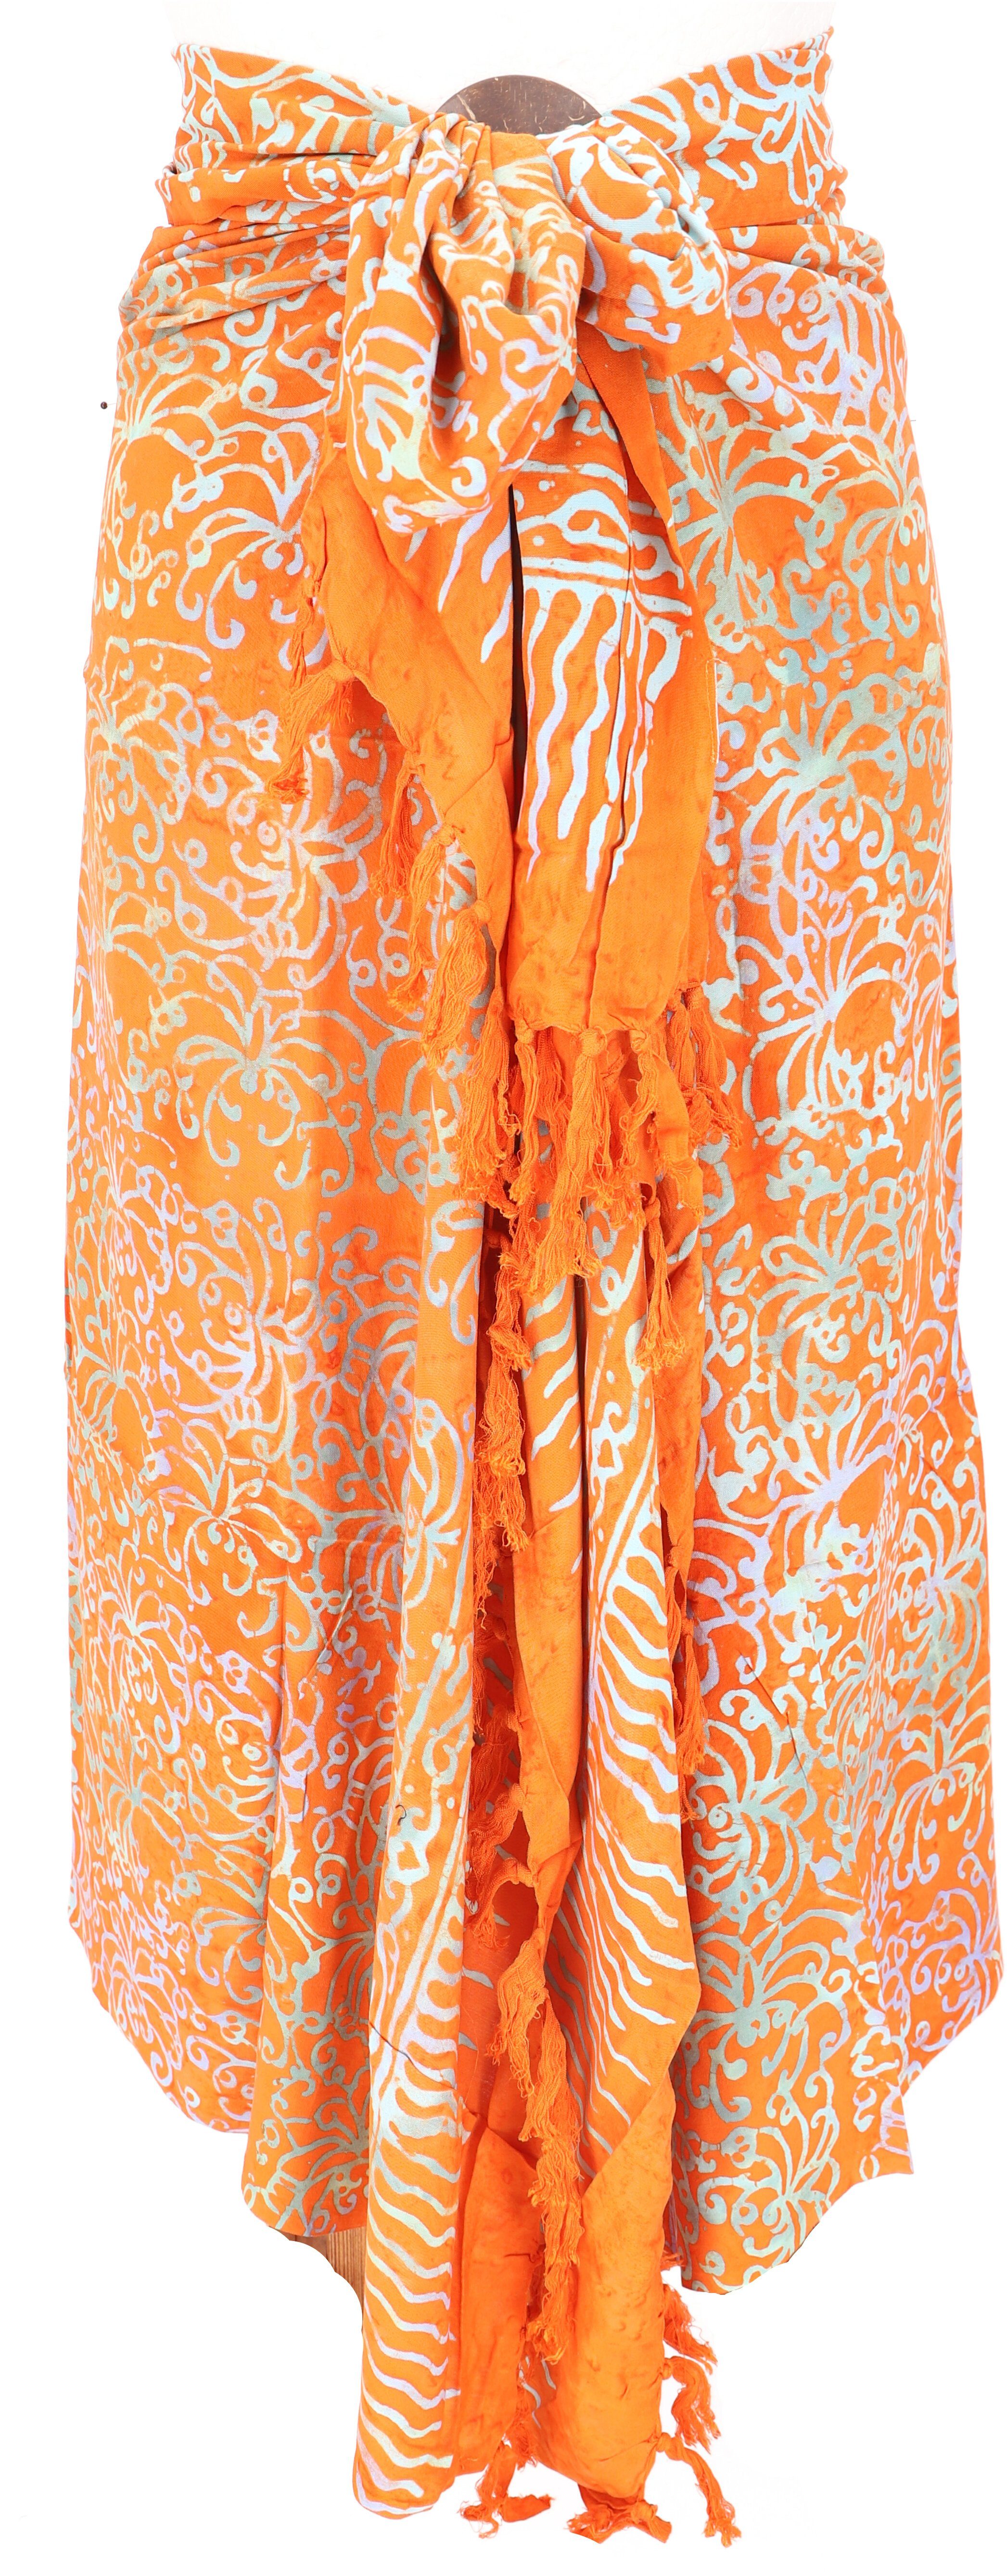 Sarong, Sarong 16/orange Wandbehang, Batik Wickelrock,.. Guru-Shop Bali Design